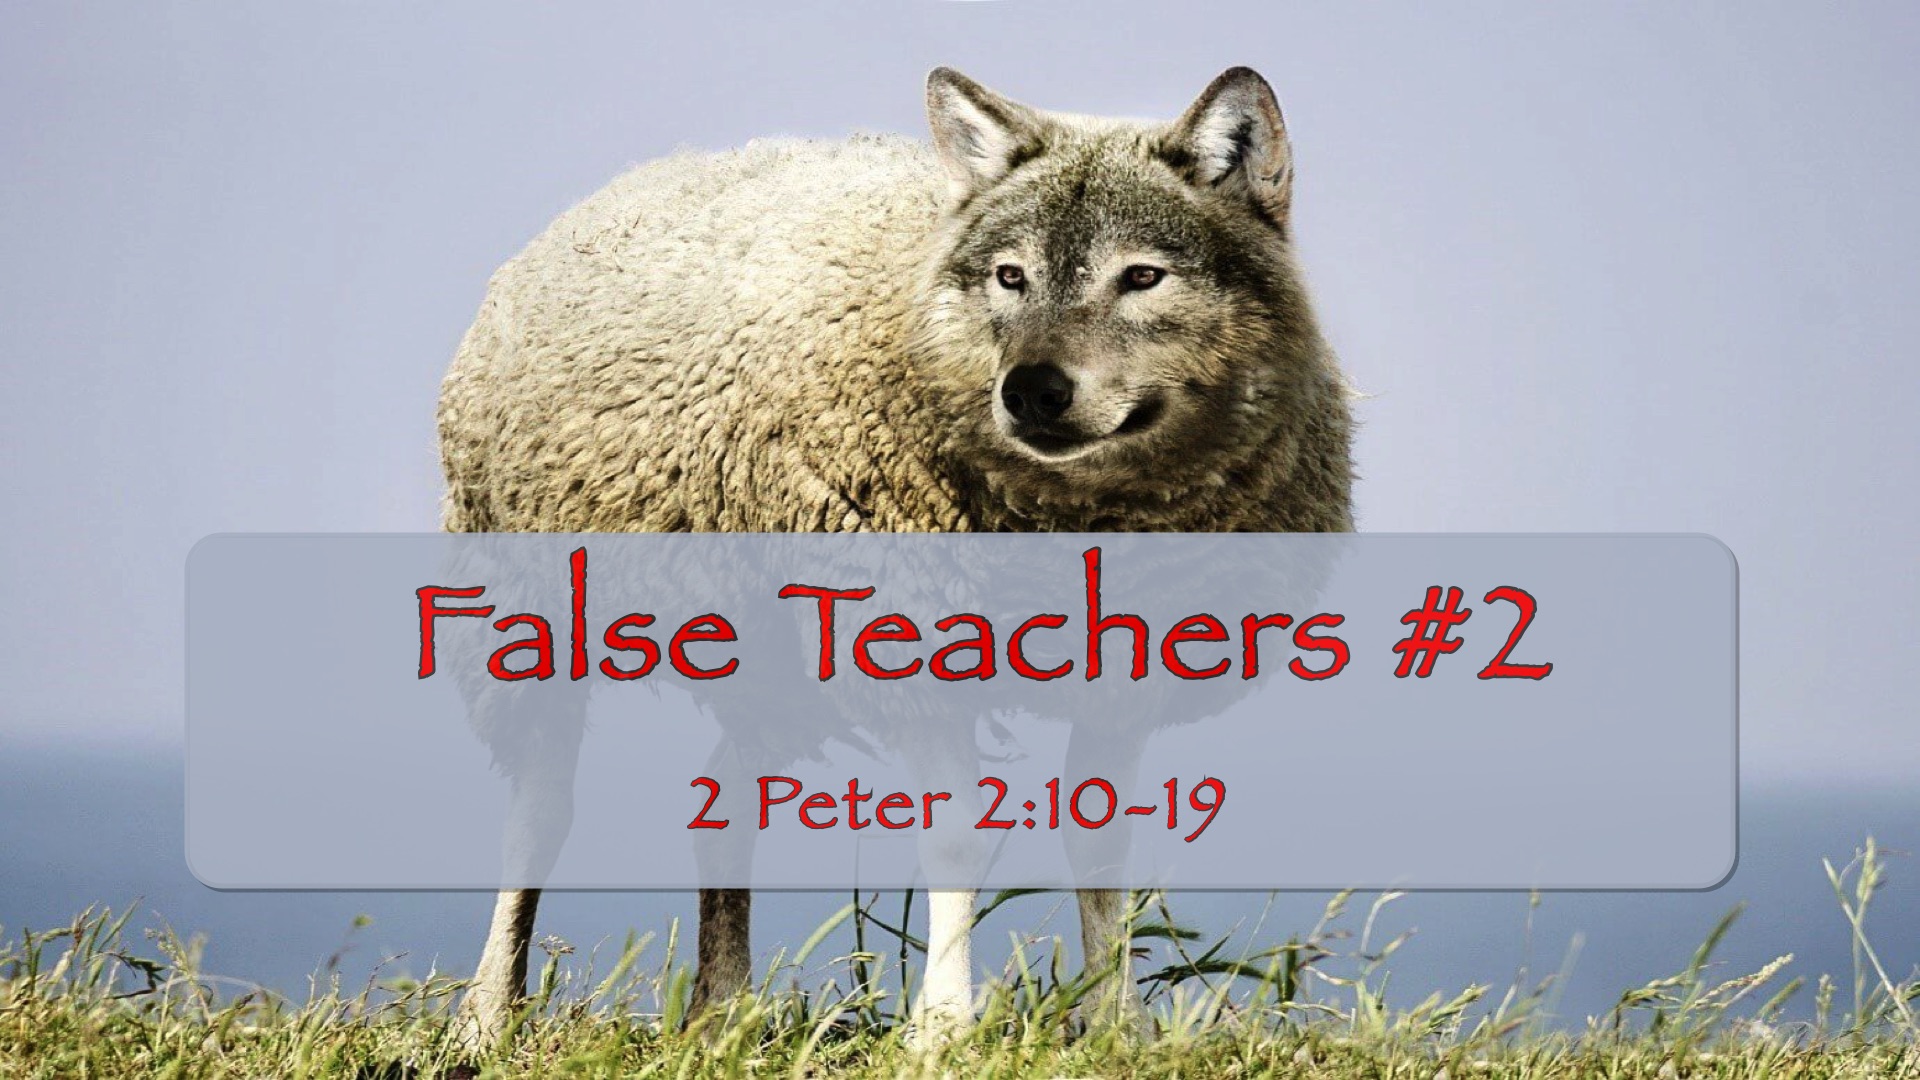 “False Teachers #2”